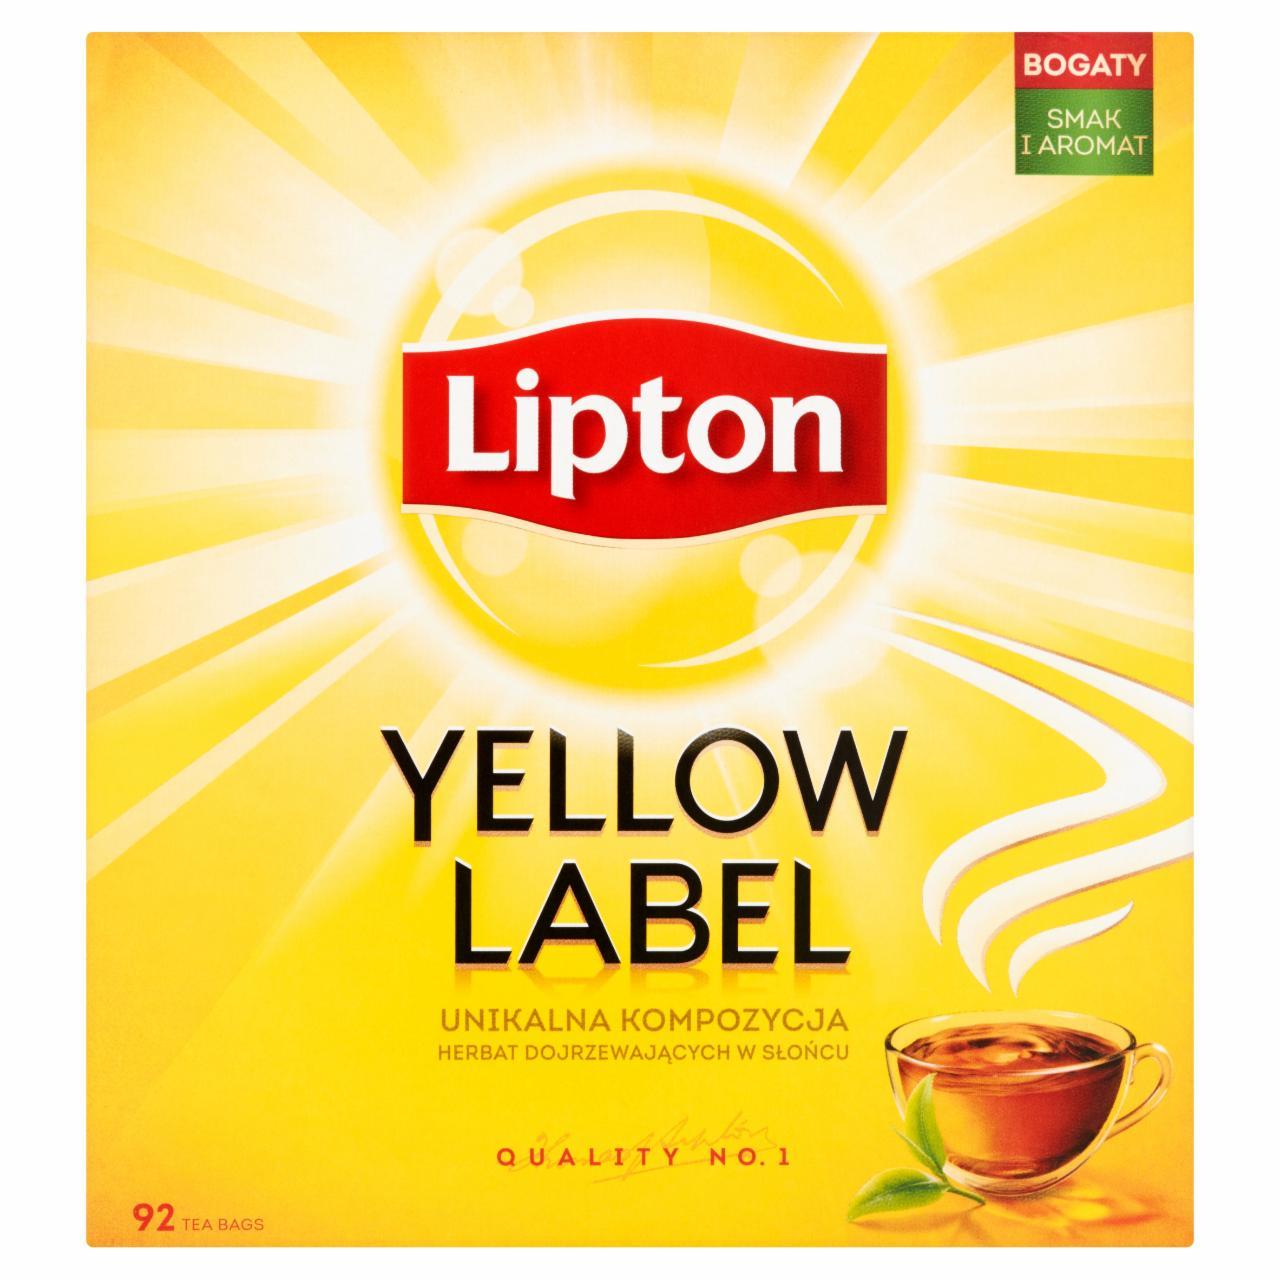 Zdjęcia - Lipton Yellow Label Herbata czarna 184 g (92 torebki)